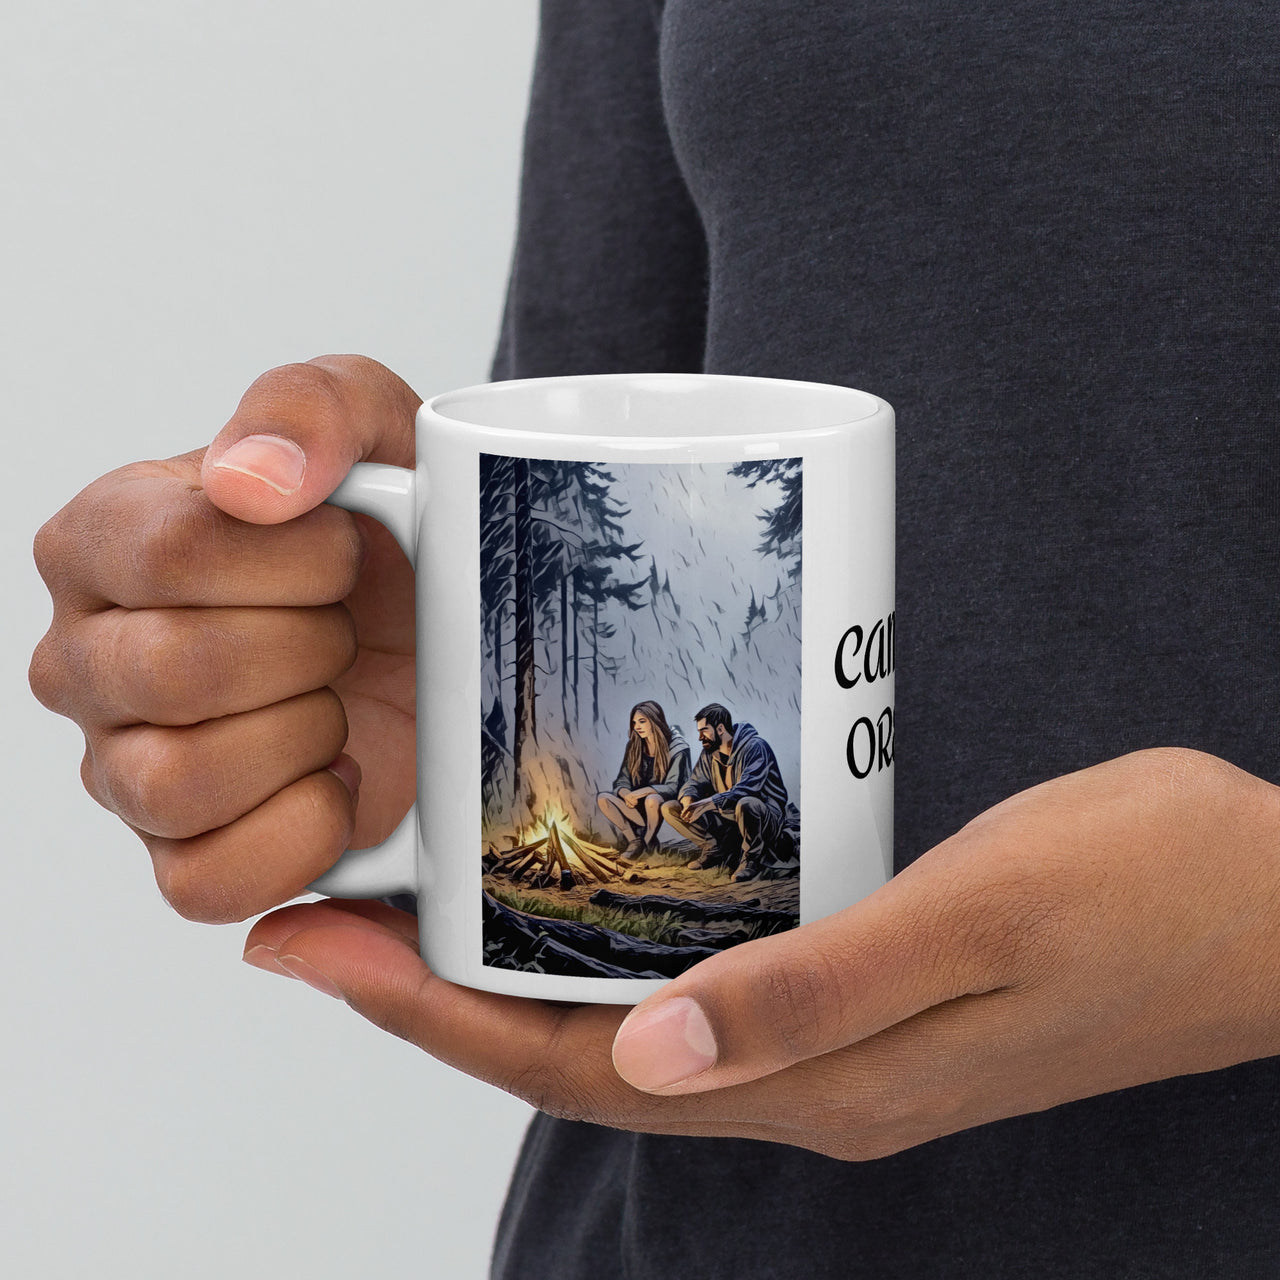 Camping Oregon - White glossy mug